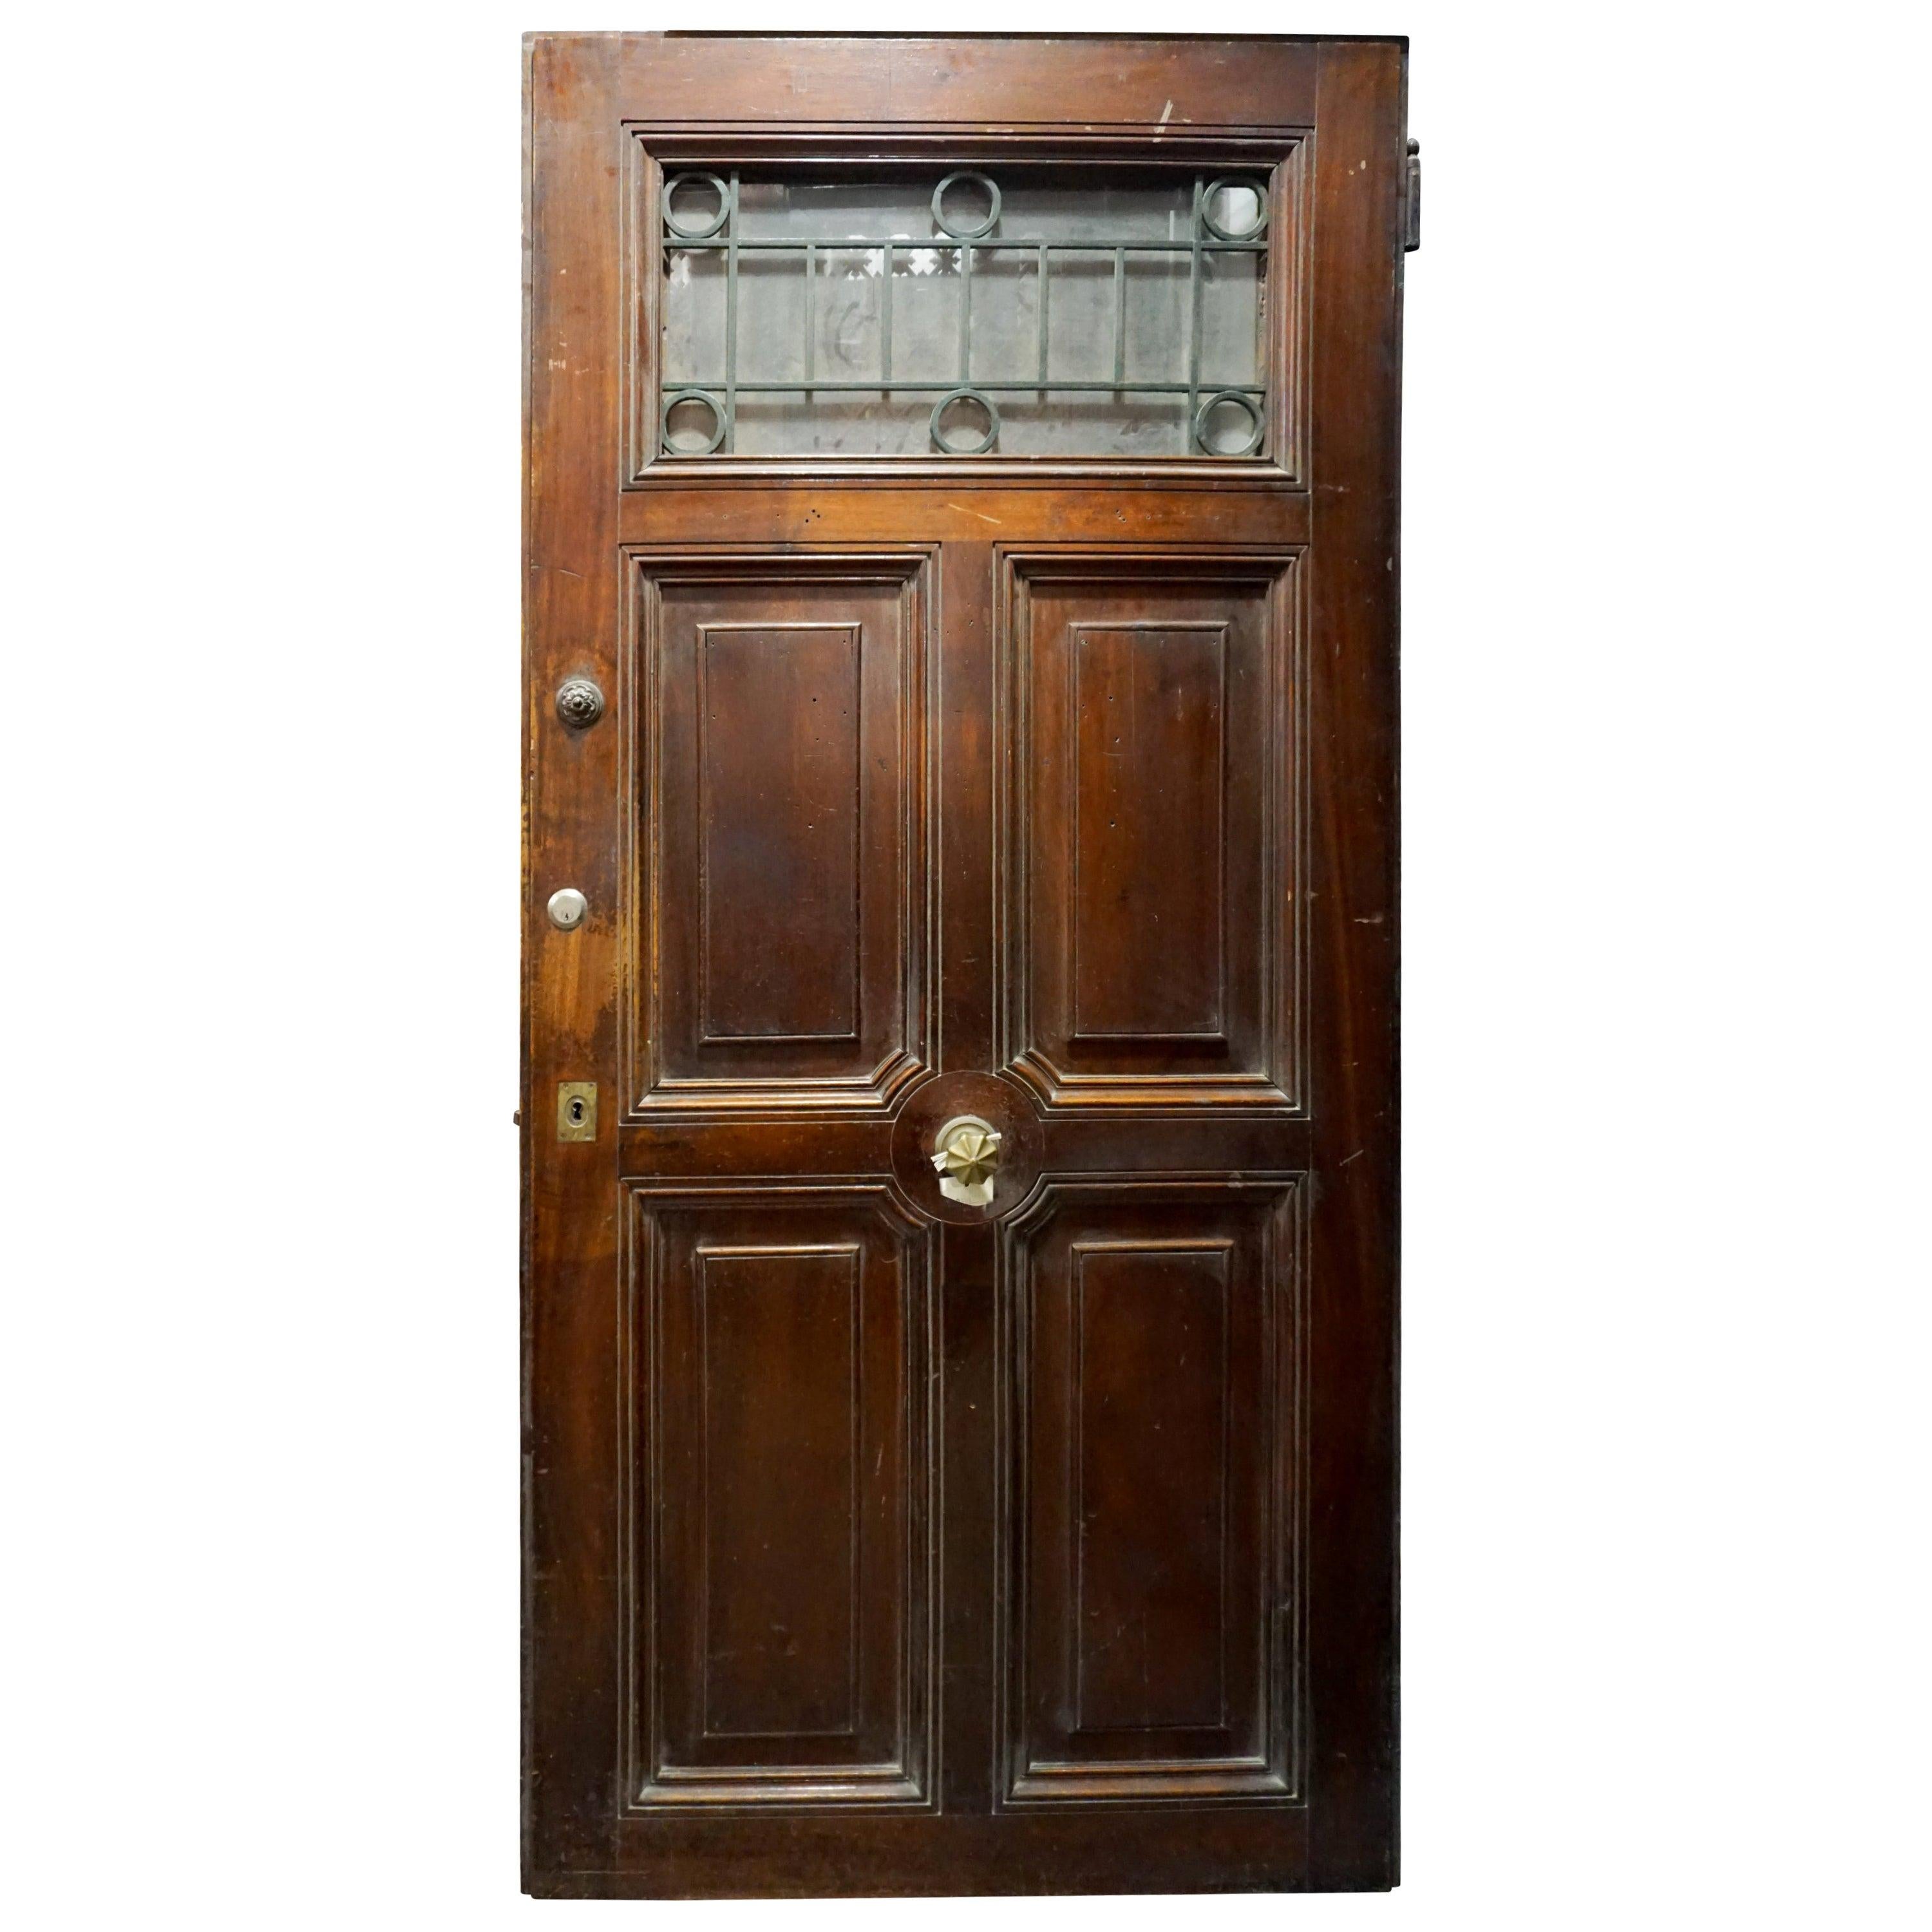 1850 French Door For Sale